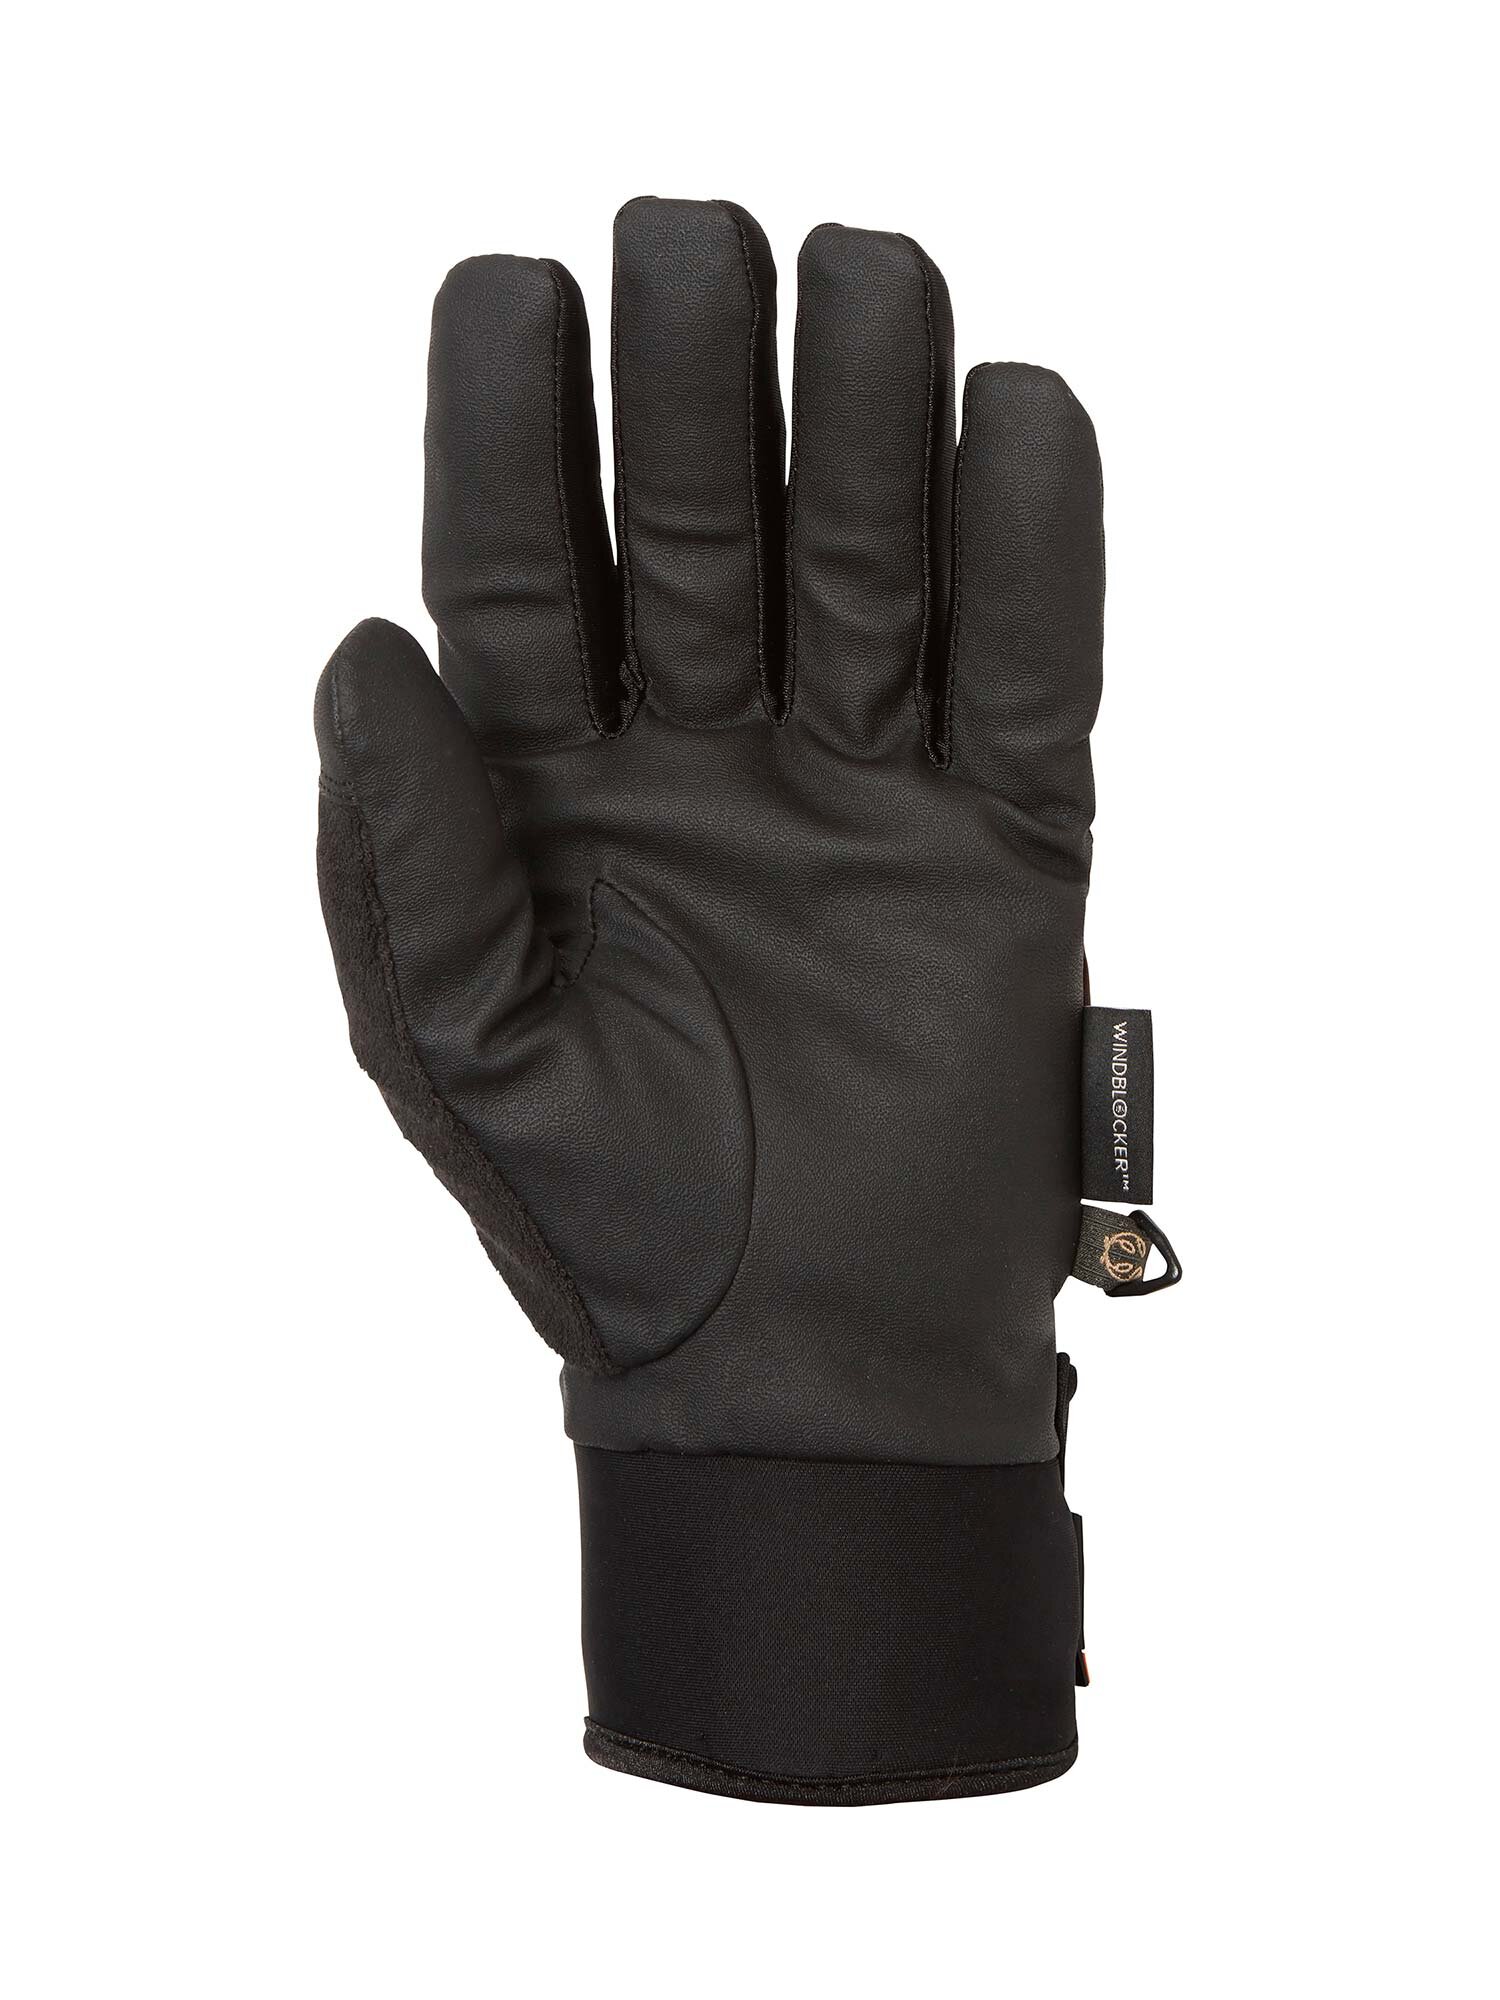 Windblocker Warm Shooting Gloves